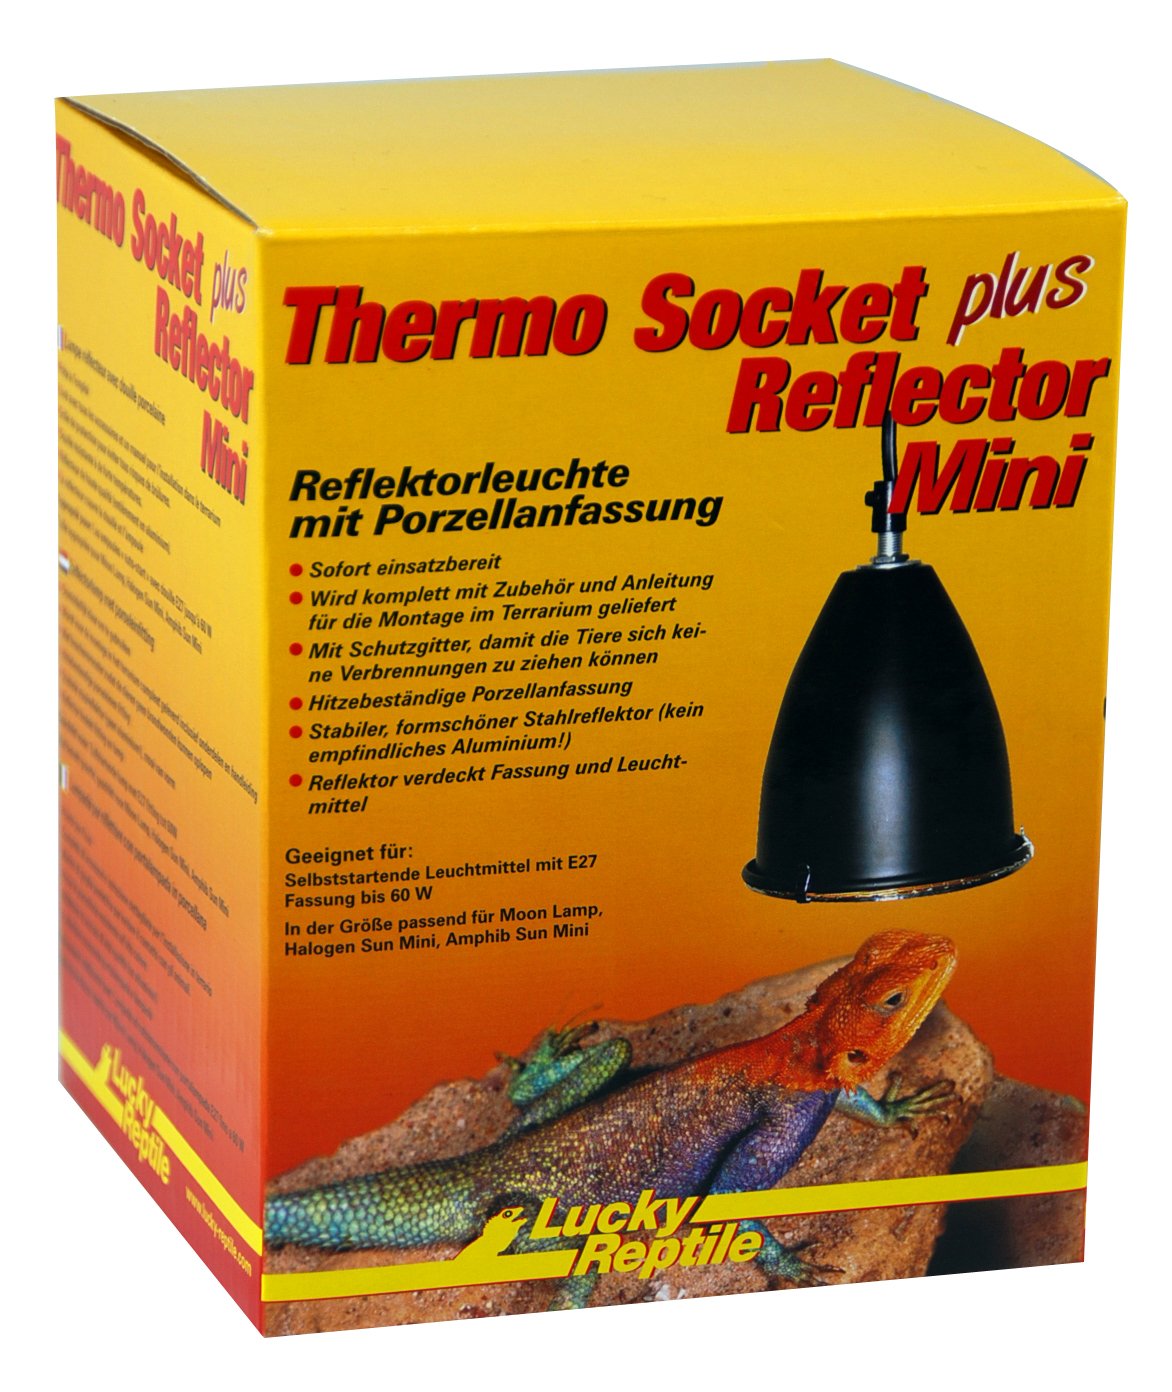 Thermo Socket mit Reflector Mini